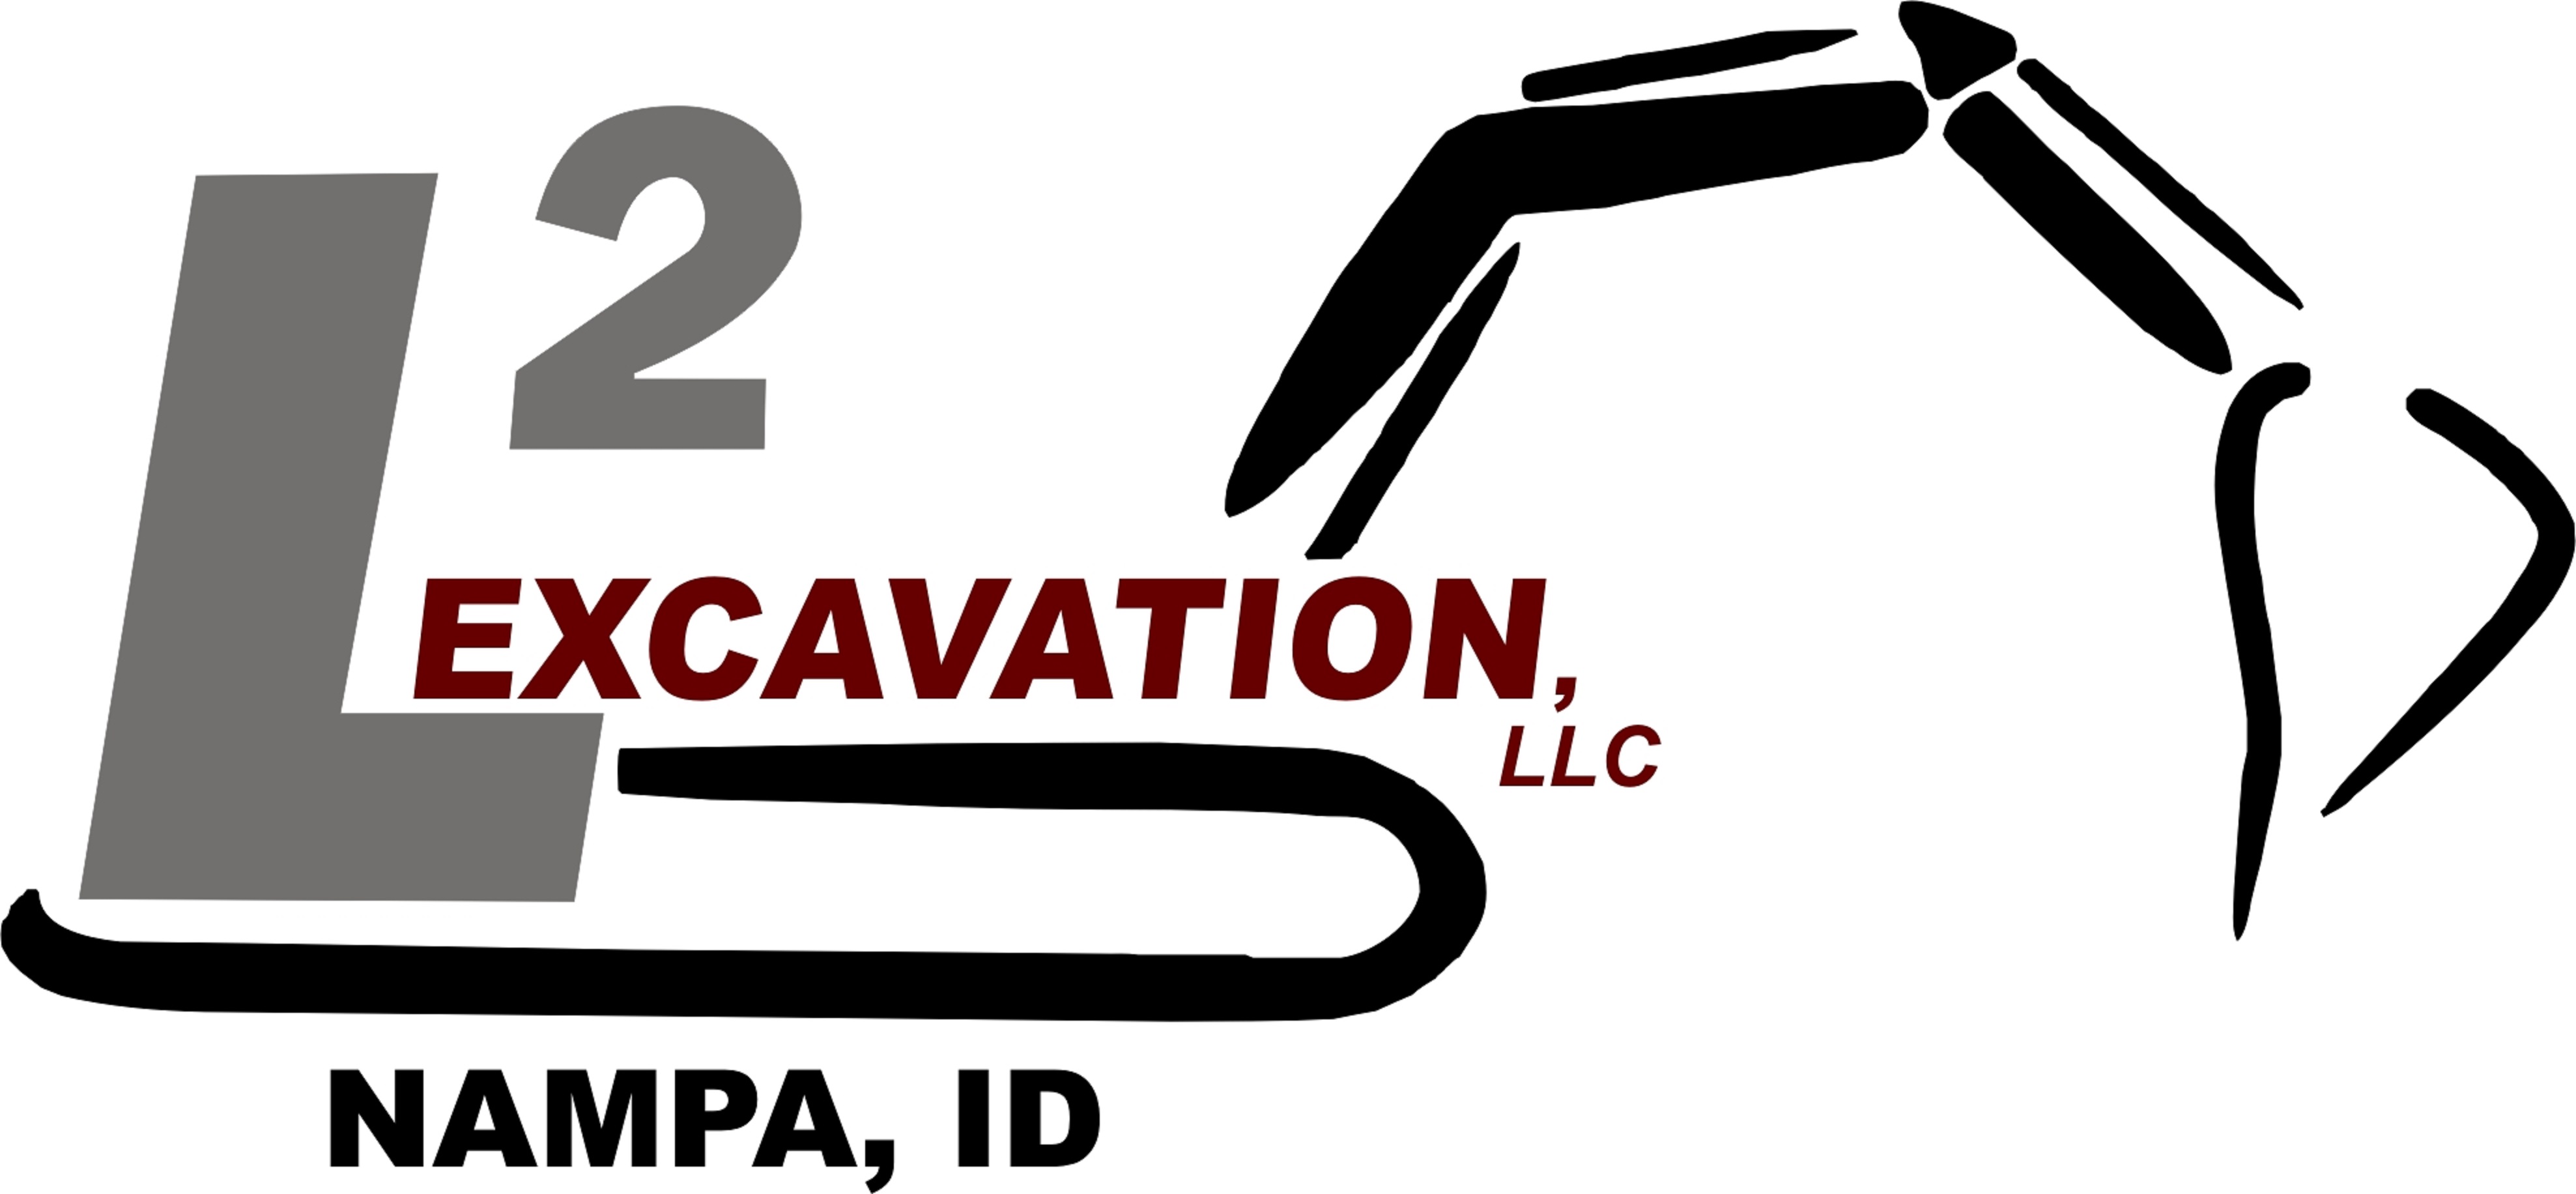 L2 Excavation, LLC